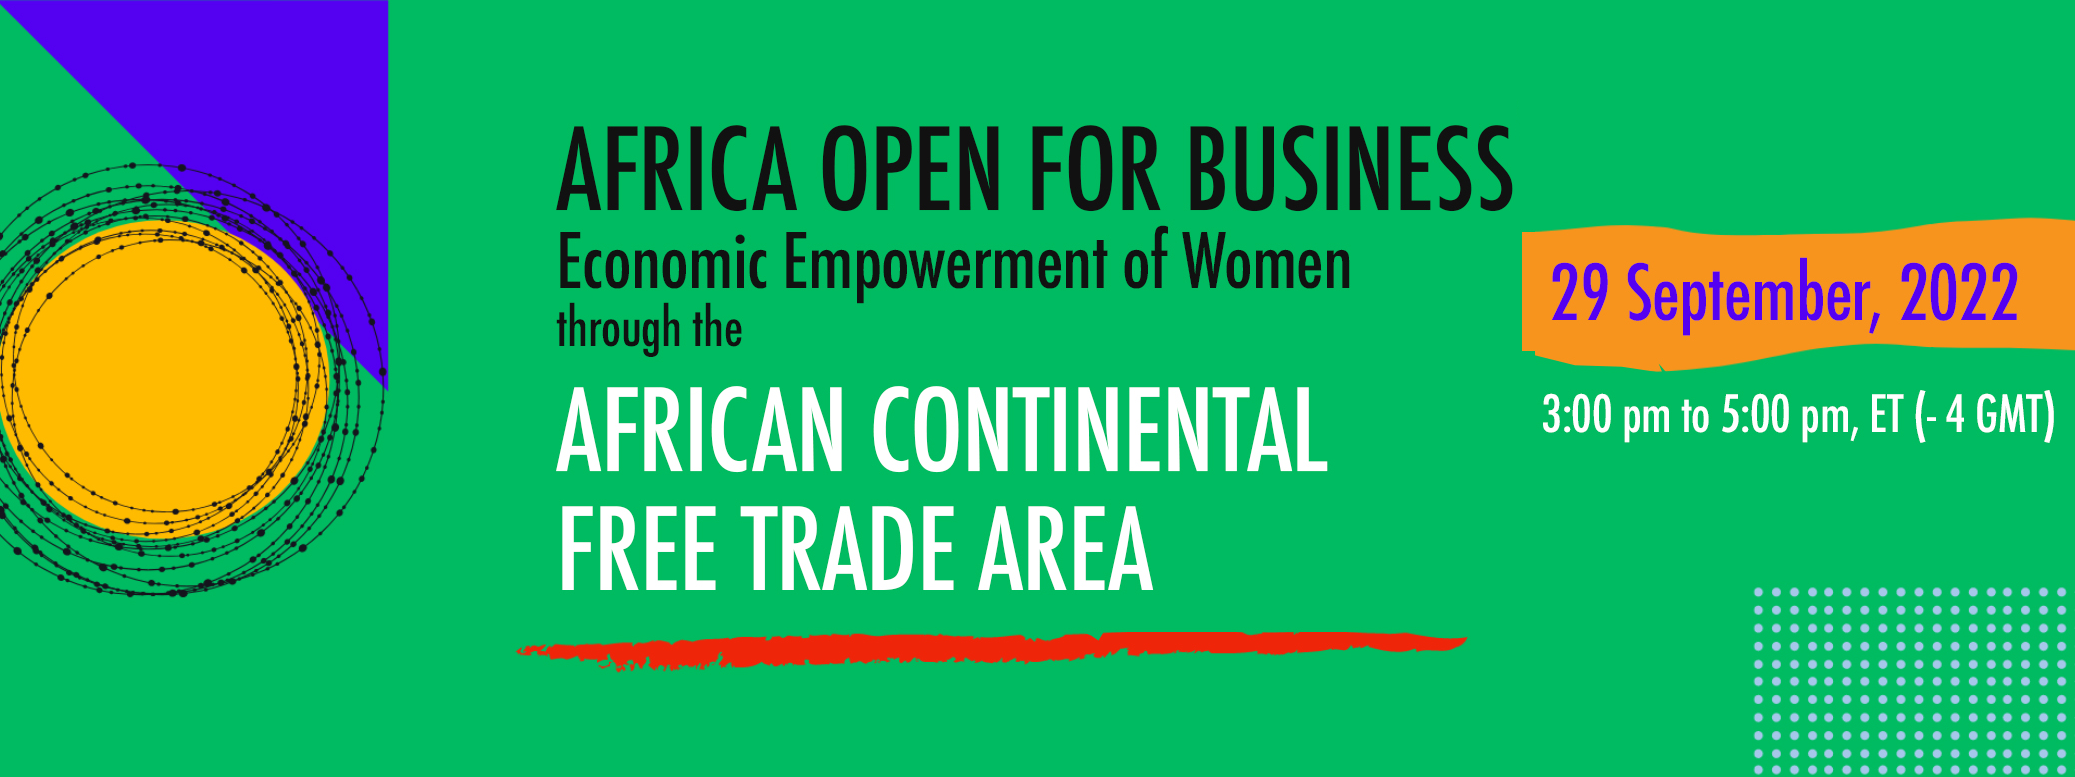 Africa Open for Business: Economic Empowerment of Women through AfCFTA